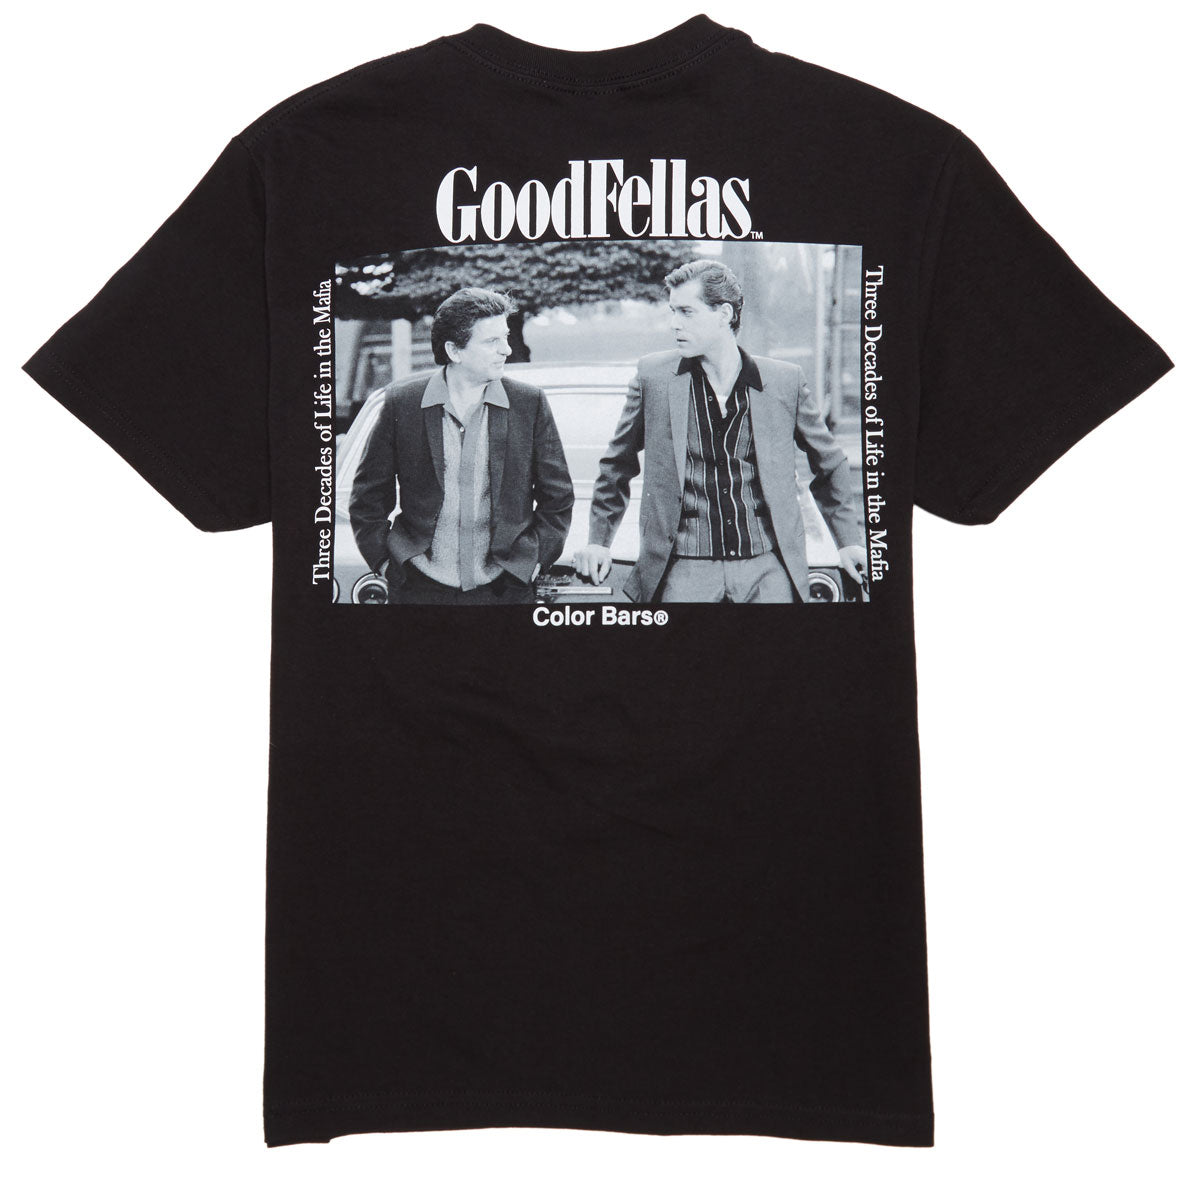 Color Bars x Goodfellas T-Shirt - Black image 2